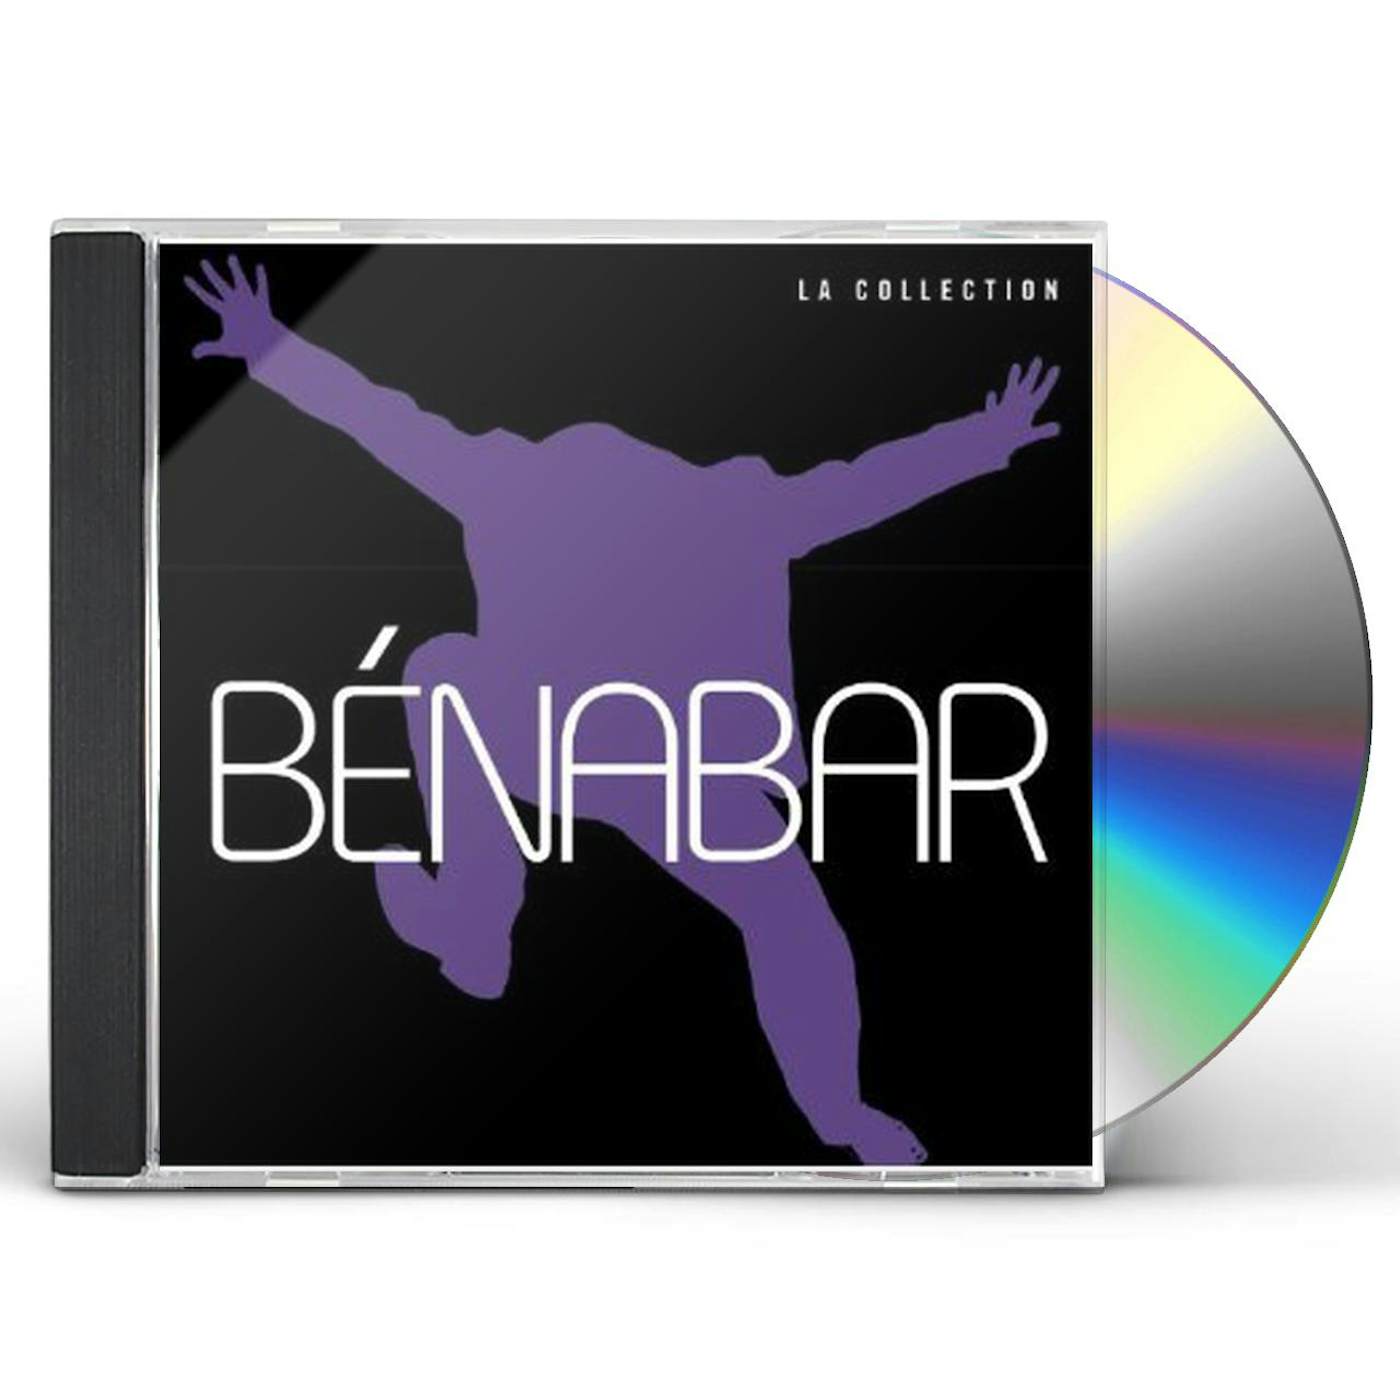 Bénabar LA COLLECTION 2013 CD